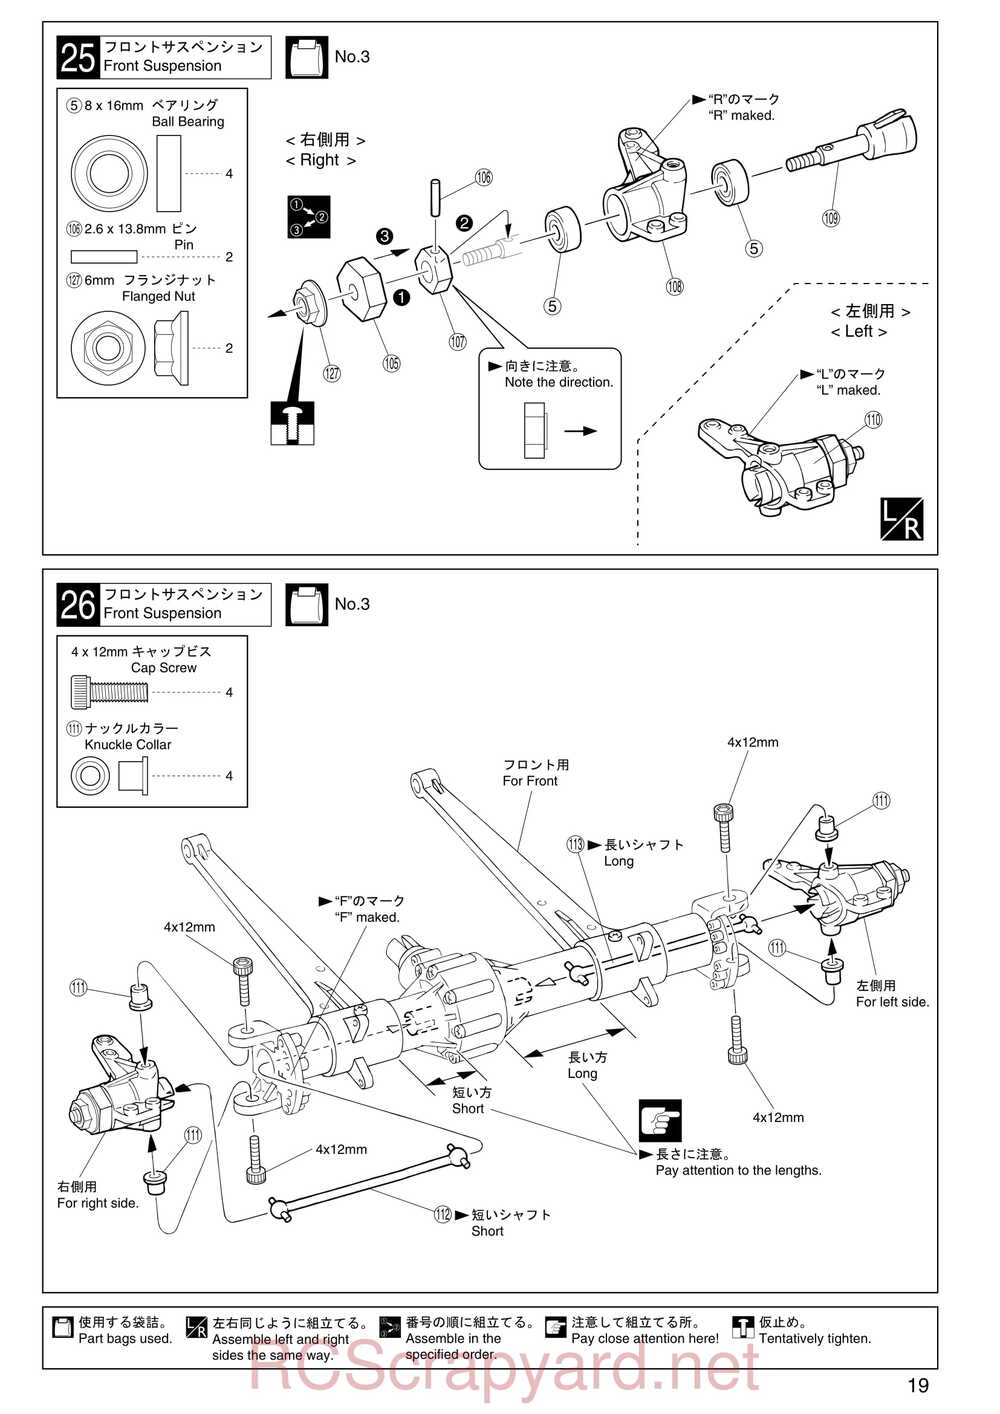 Kyosho - 30521b - Twin-Force - Manual - Page 19